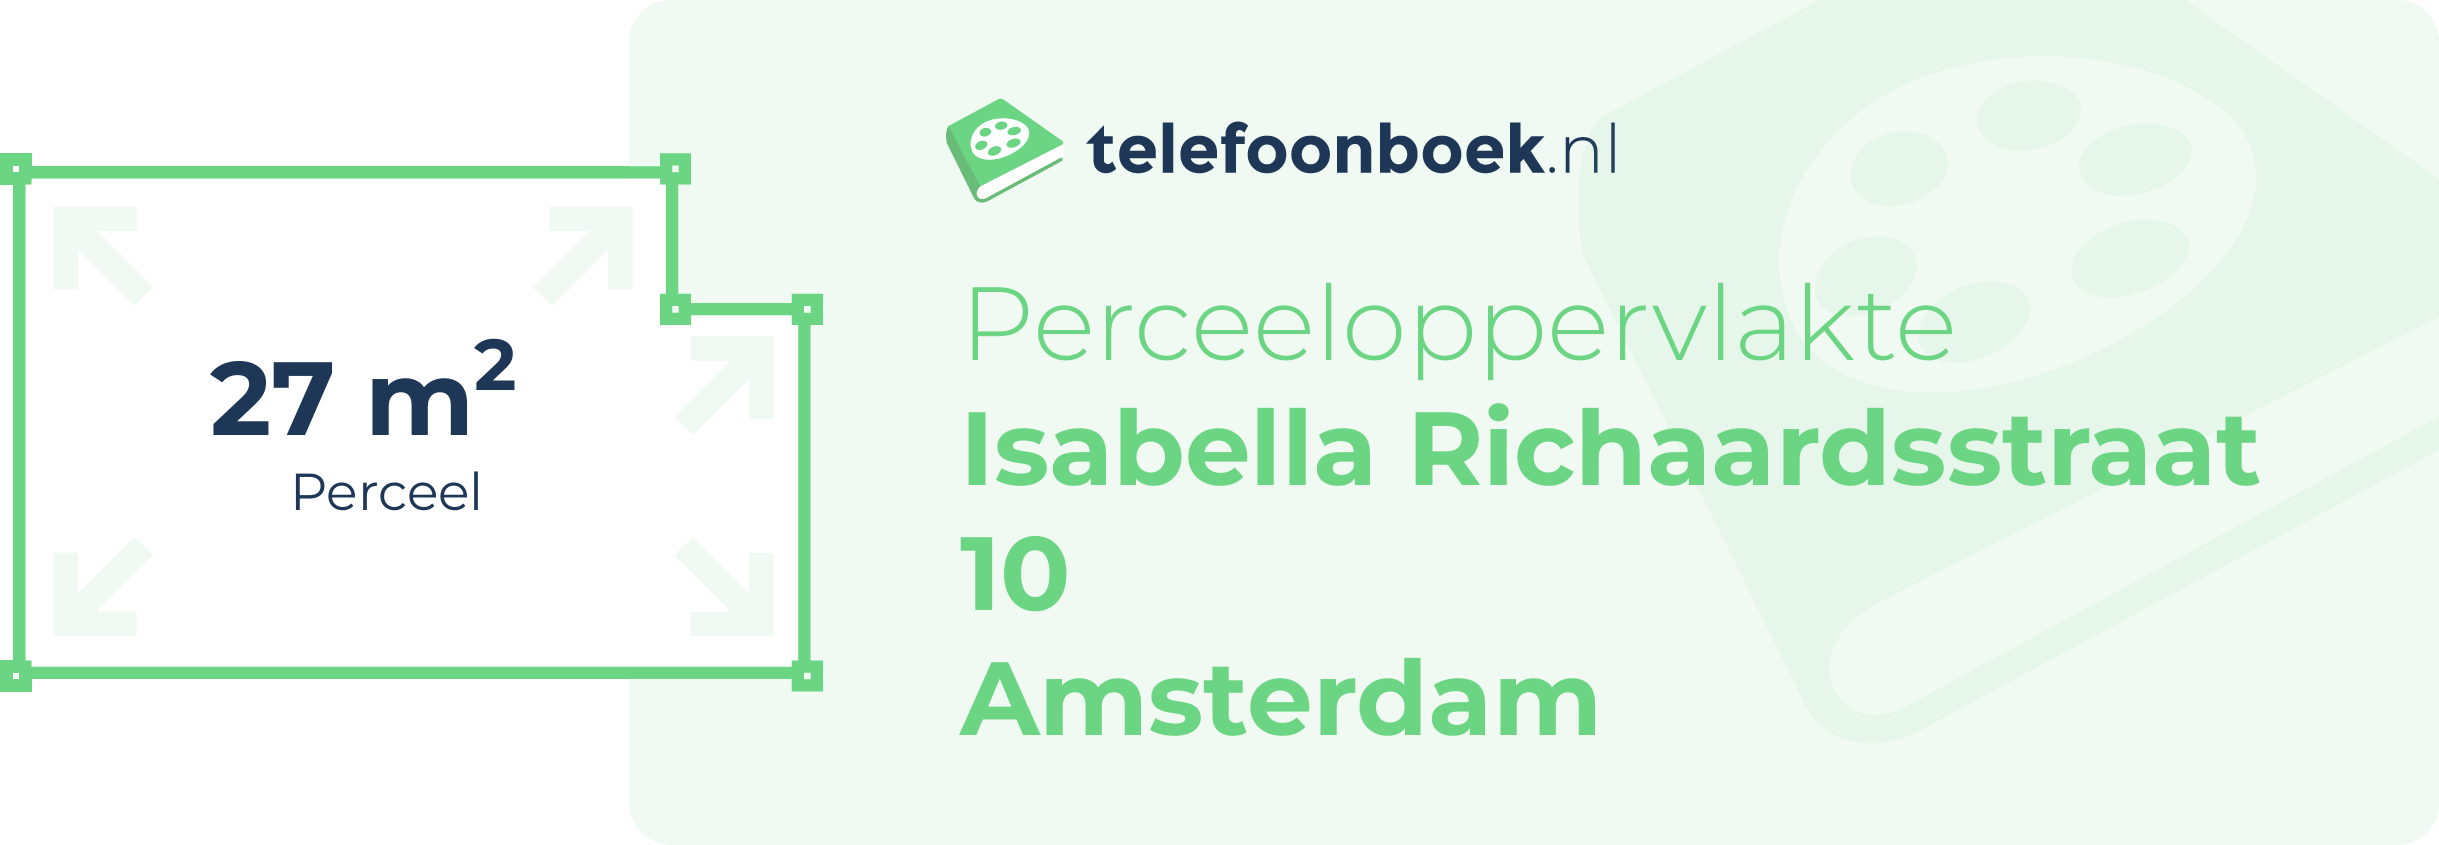 Perceeloppervlakte Isabella Richaardsstraat 10 Amsterdam